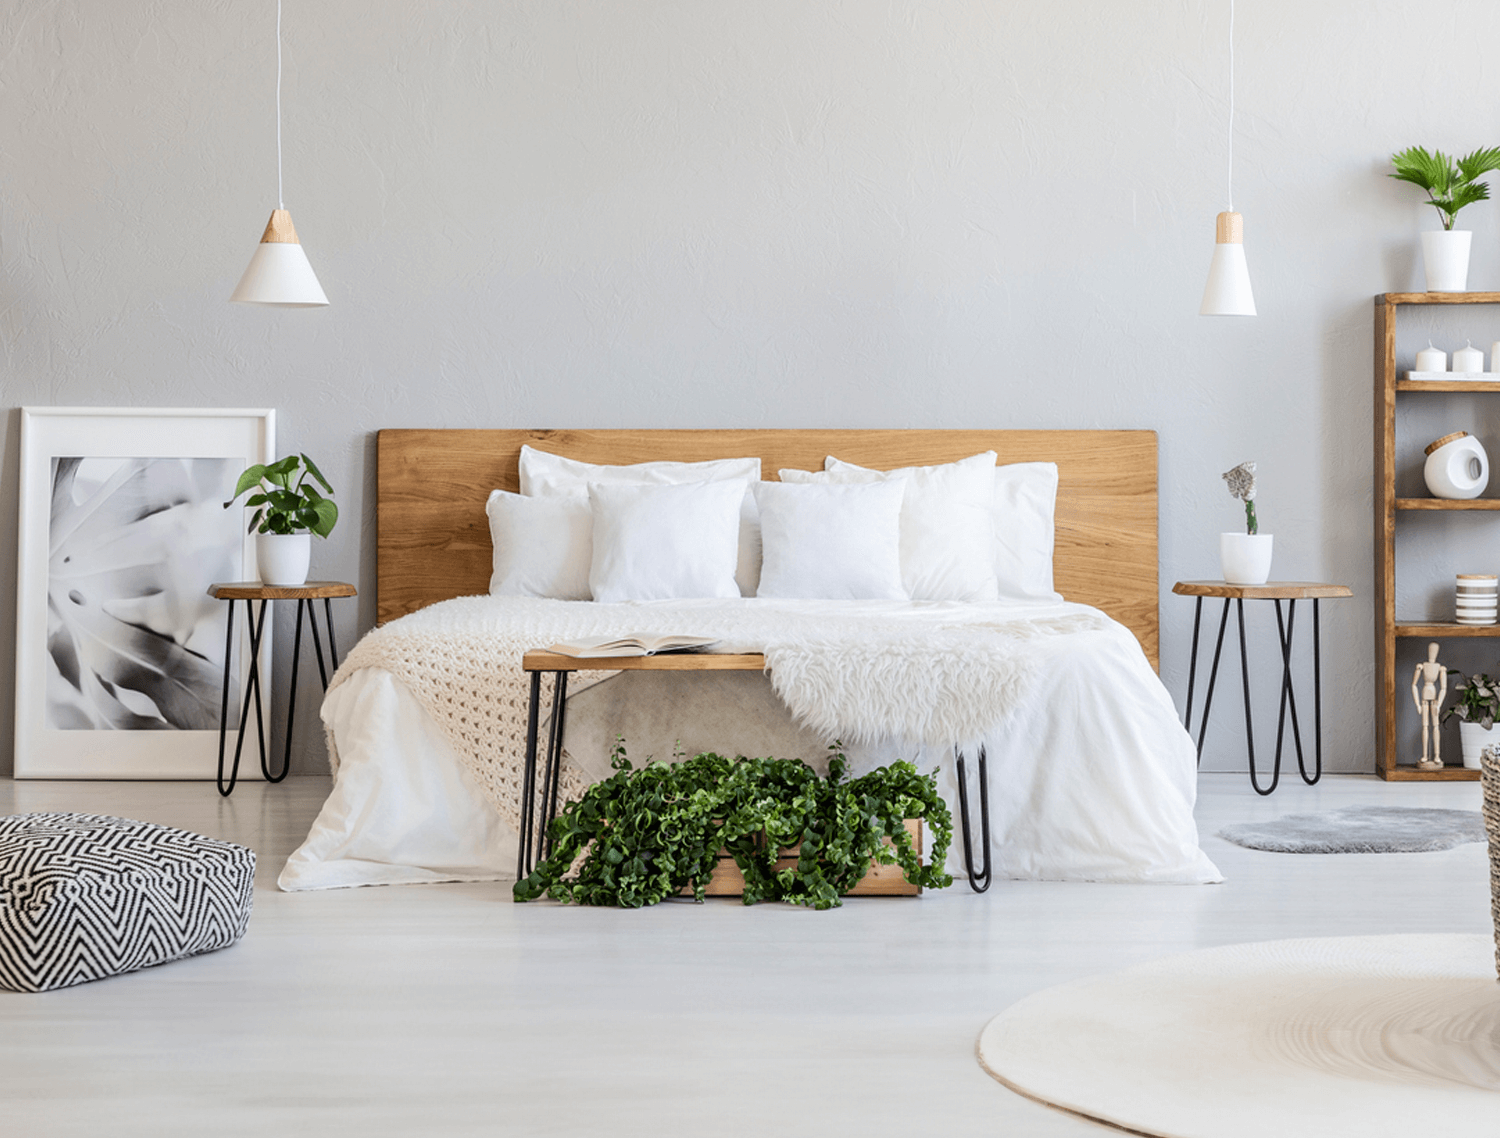 soft-crispy-cotton-bedding-in-the-white-bedroom